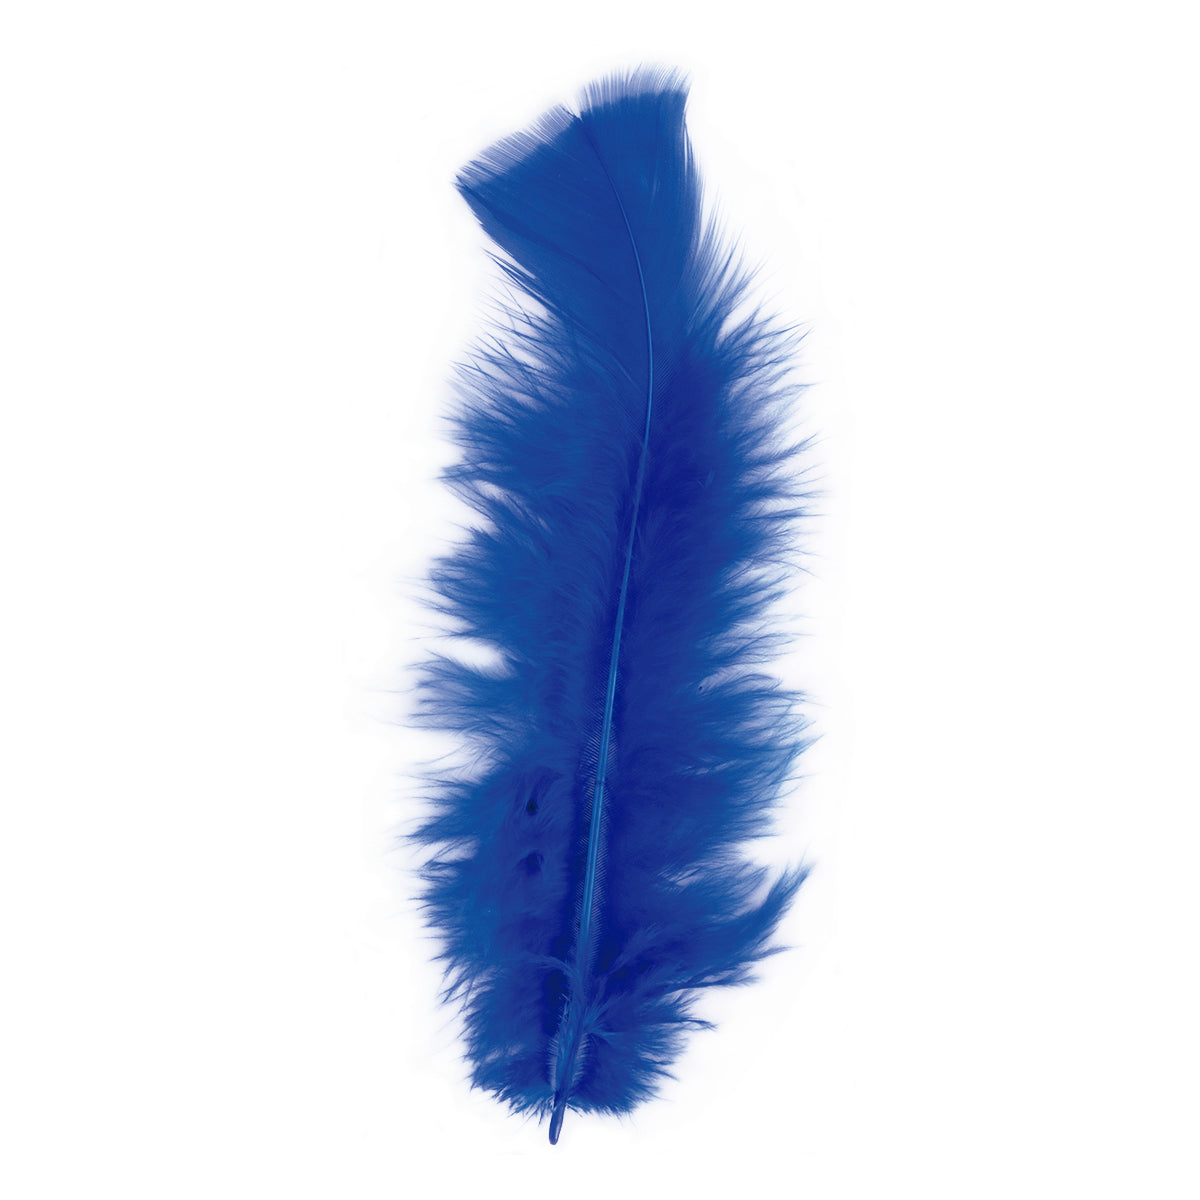 Touch of Nature Mini alas de plumas 7x6 azul marino 1pc